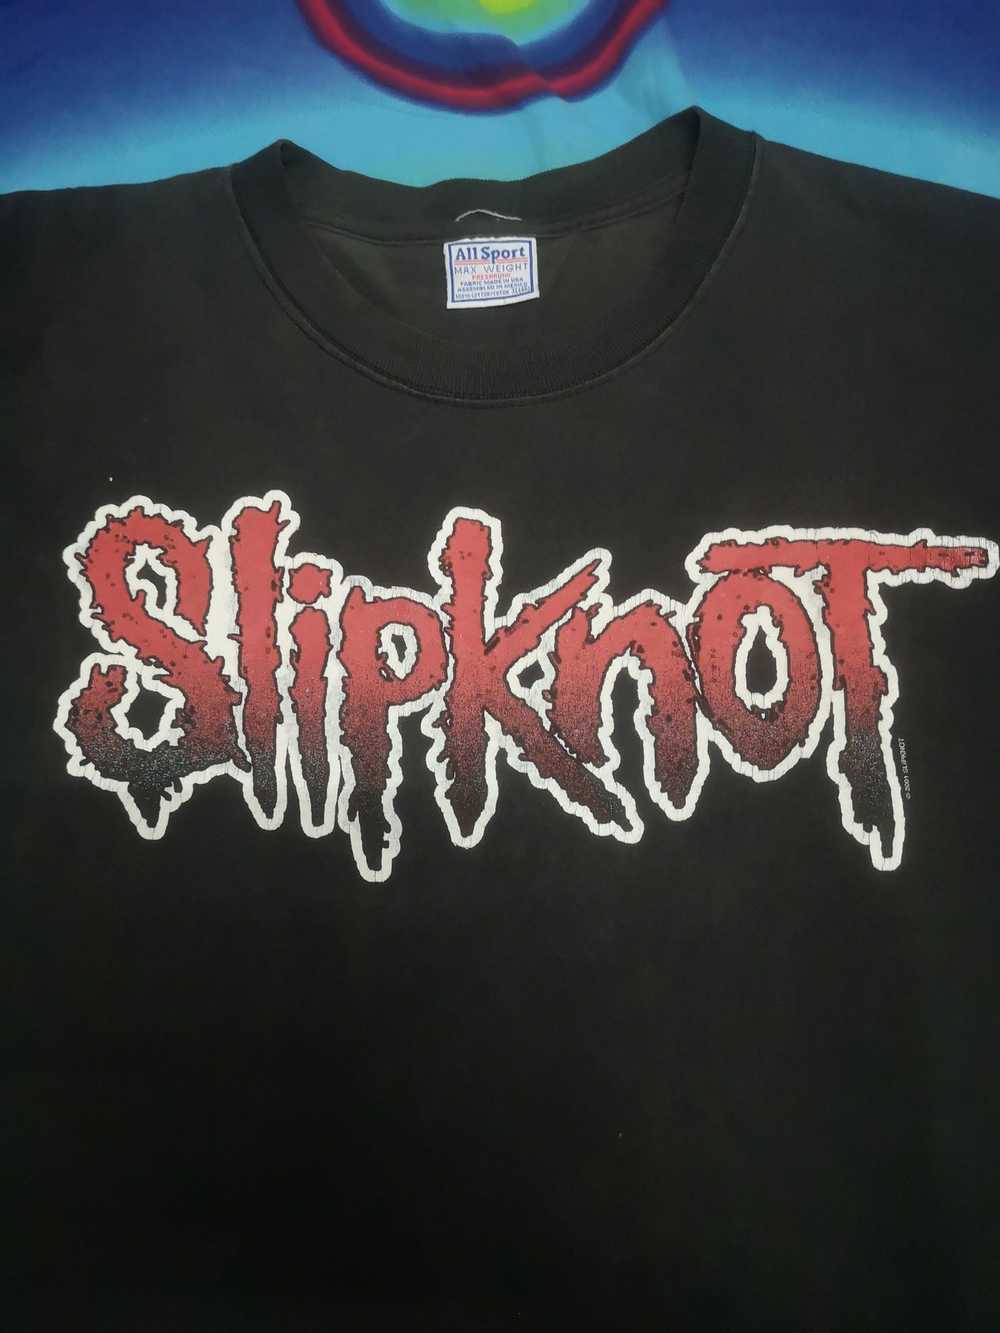 All Sport × Band Tees Vintage Slipknot band tees - image 2